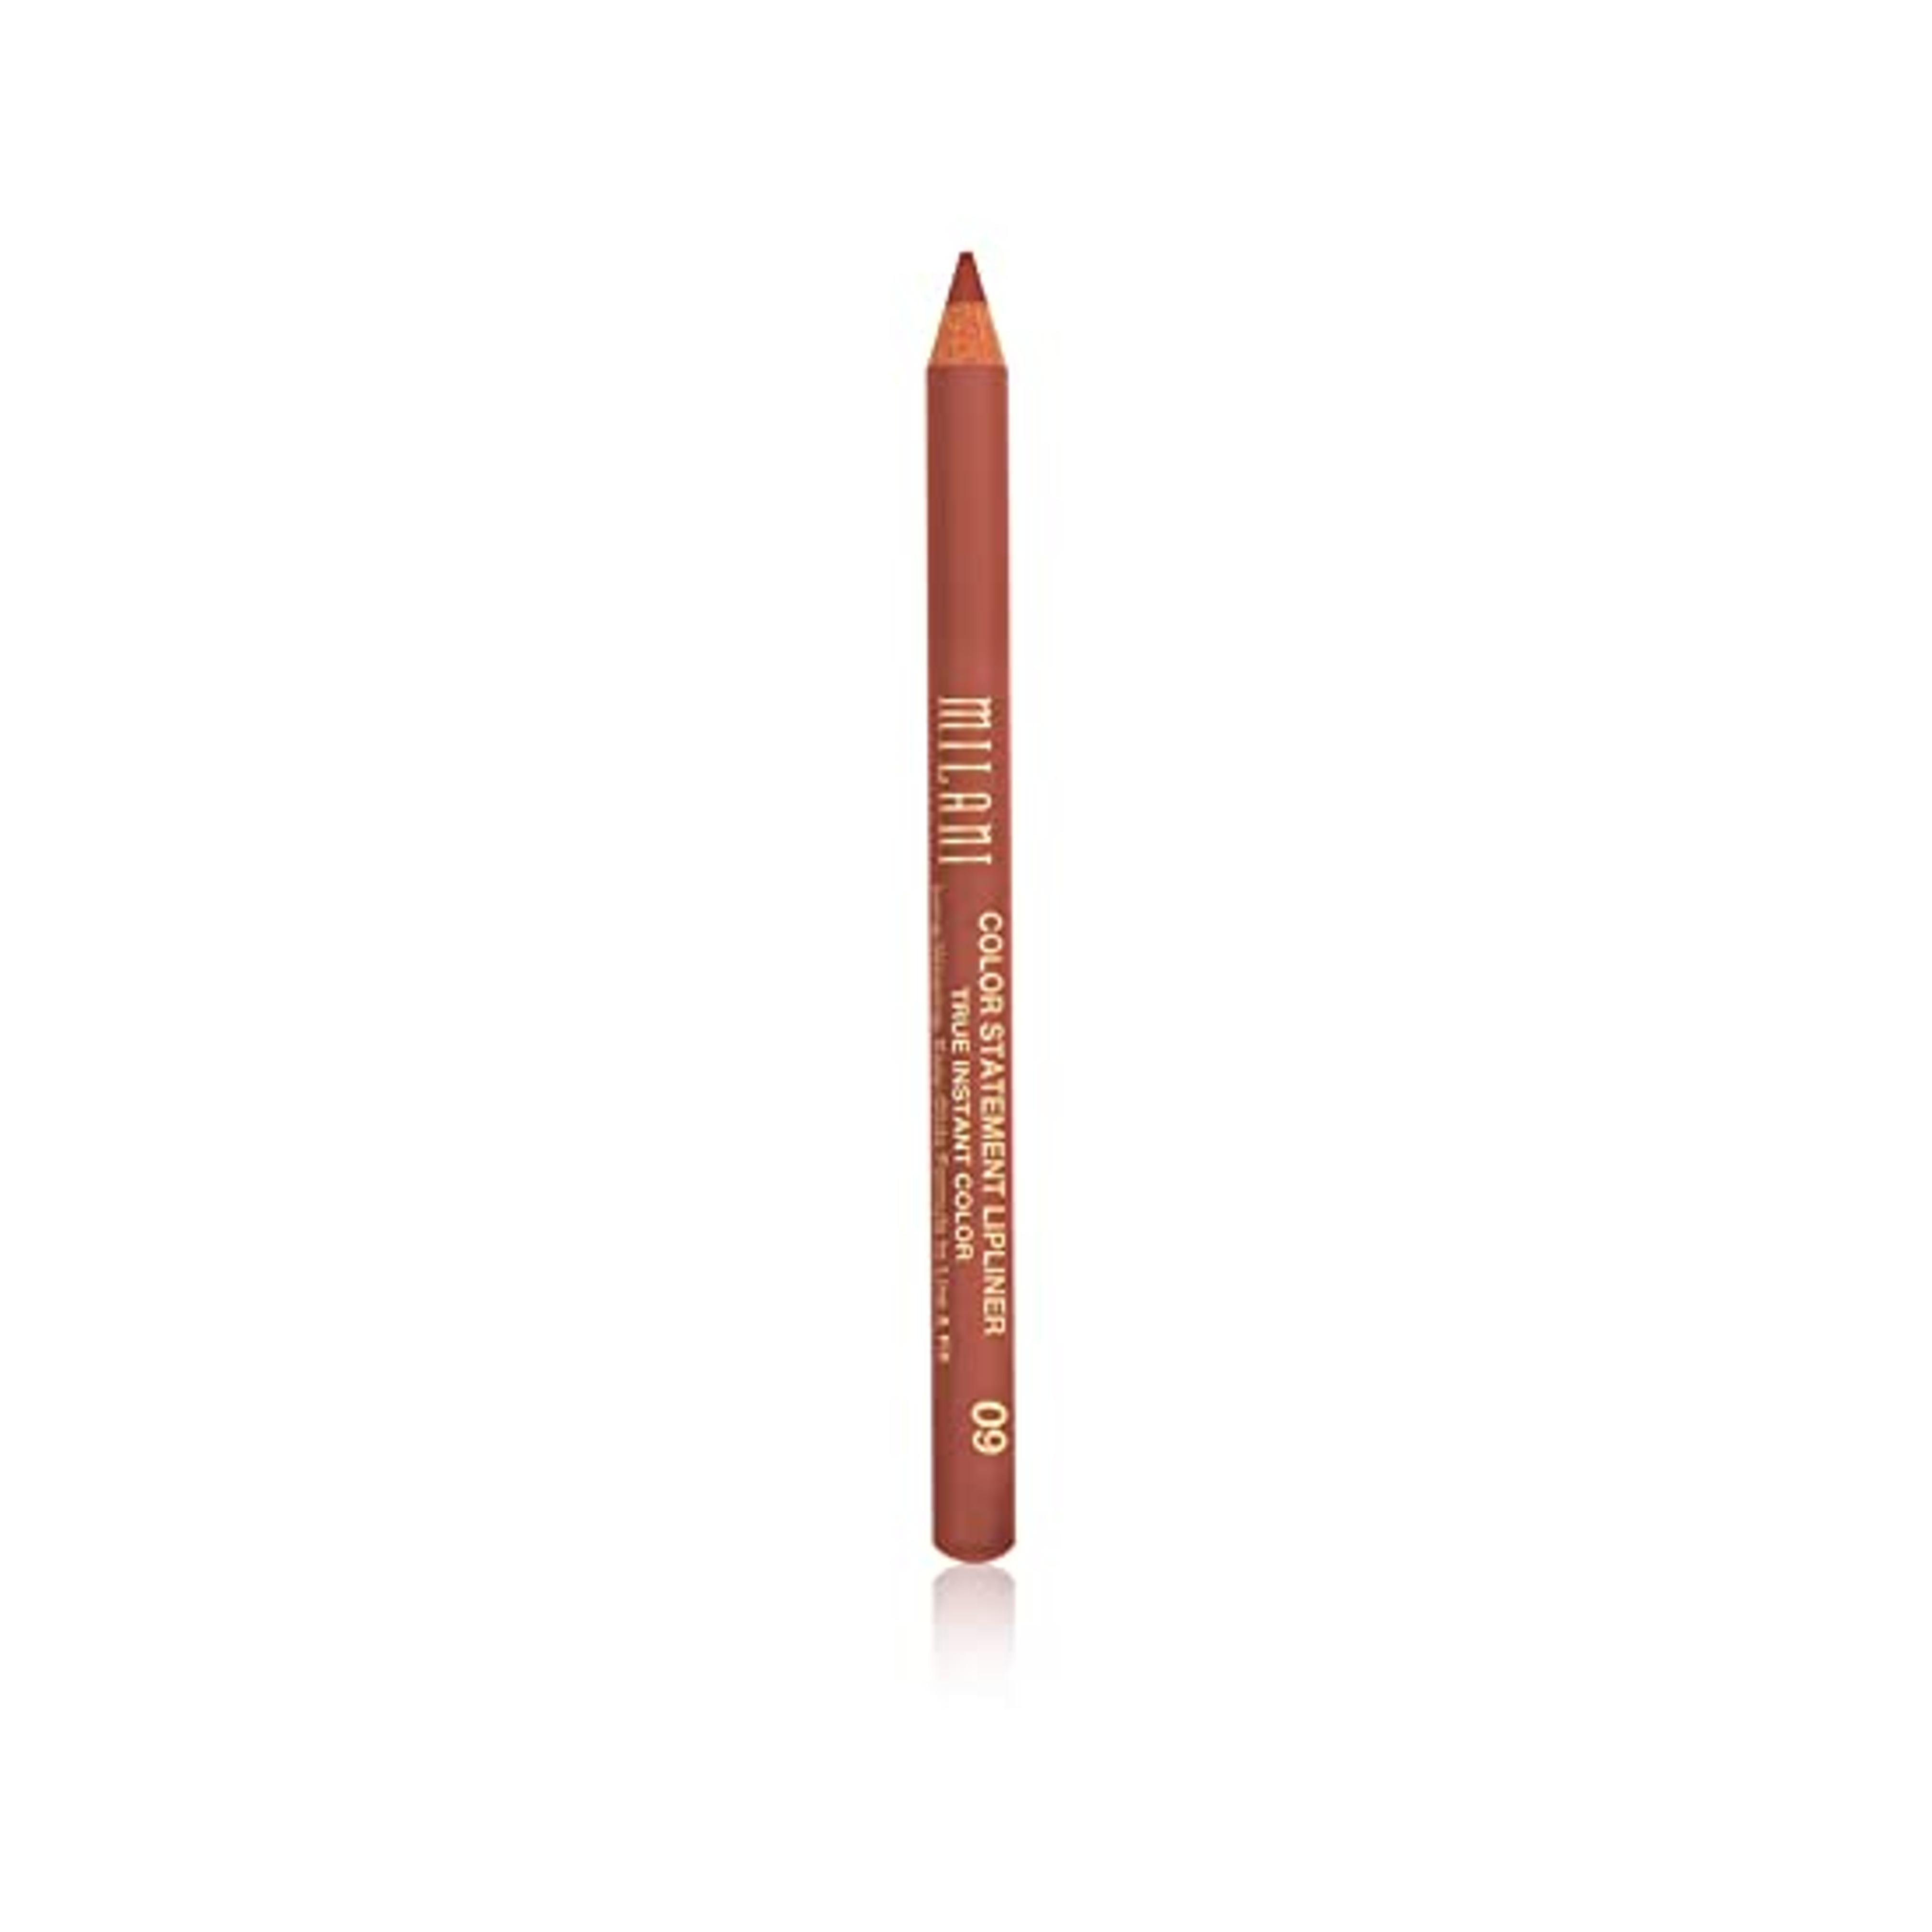 Amazon.com : Milani Color Statement Lipliner - Spice (0.04 Ounce) Cruelty-Free Lip Pencil to Define, Shape & Fill Lips : Lip Liners : Beauty & Personal Care